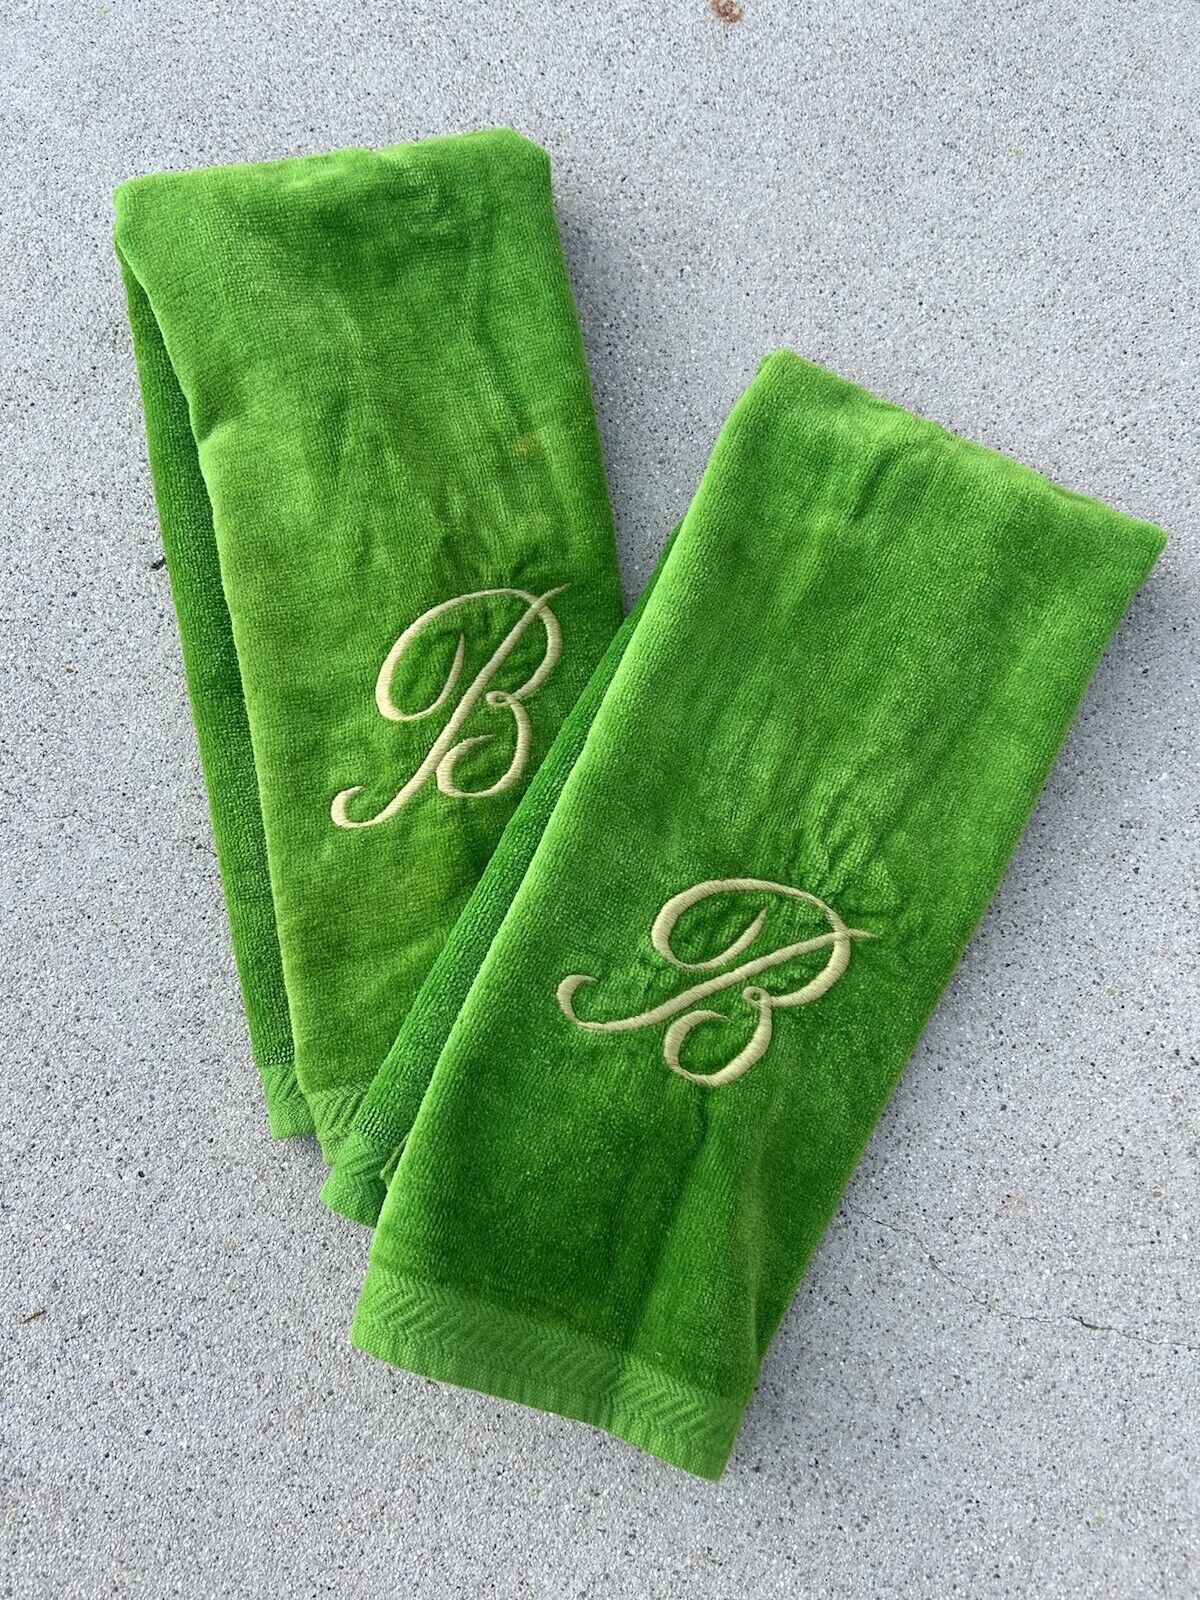 2 Vintage Stevens Utica Hand Towel “B” Monogram Green 